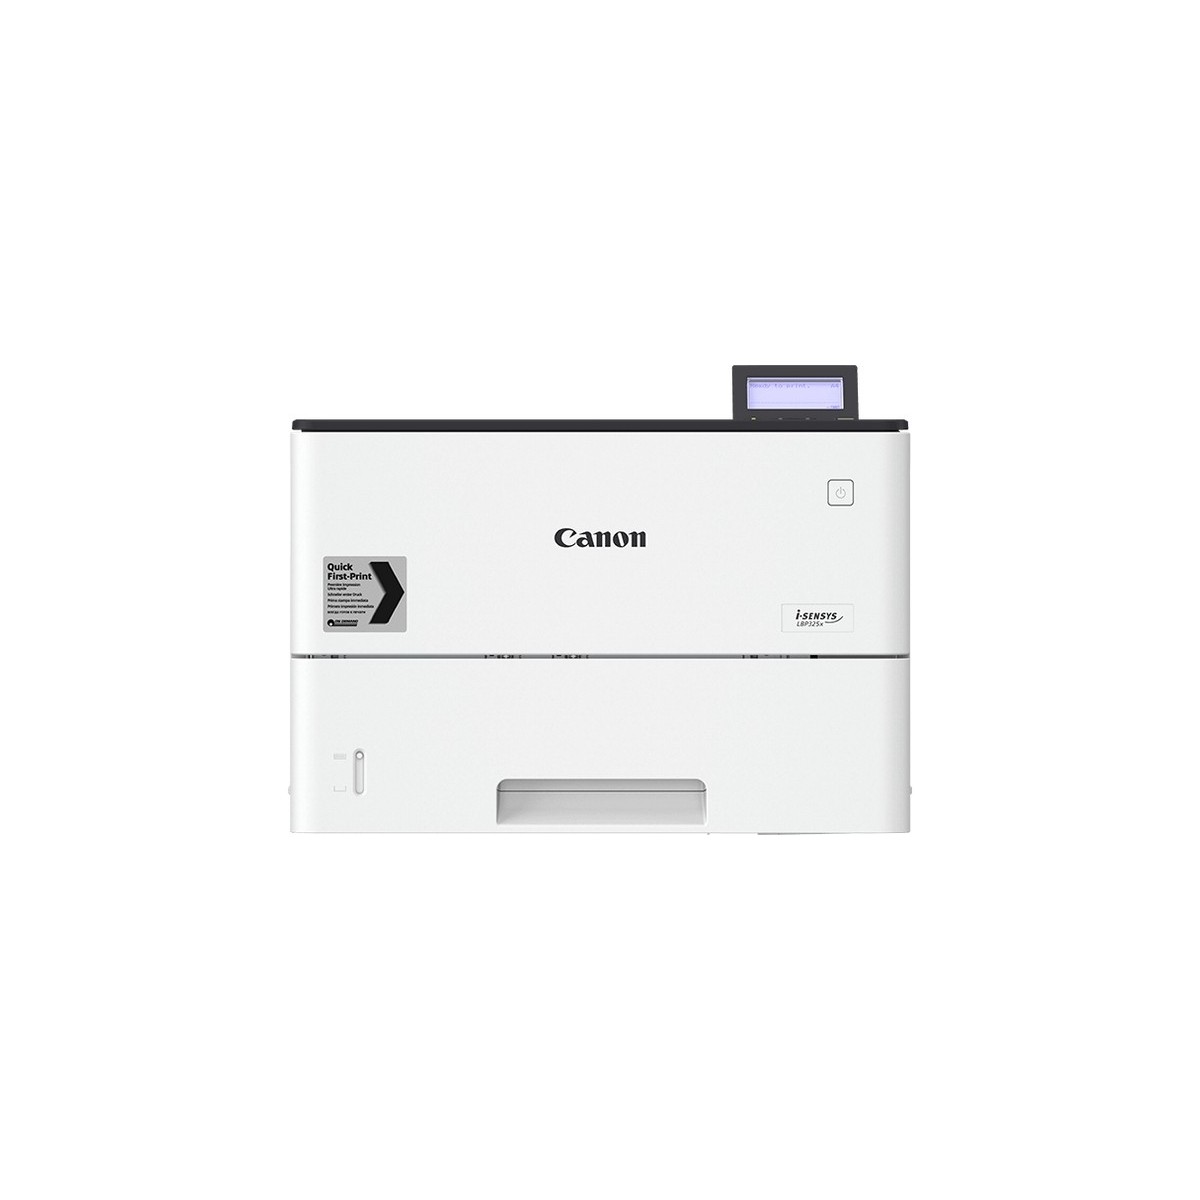 Canon i-SENSYS LBP325x - Laser - 600 x 600 DPI - A4 - 43 ppm - Duplex printing - Network ready